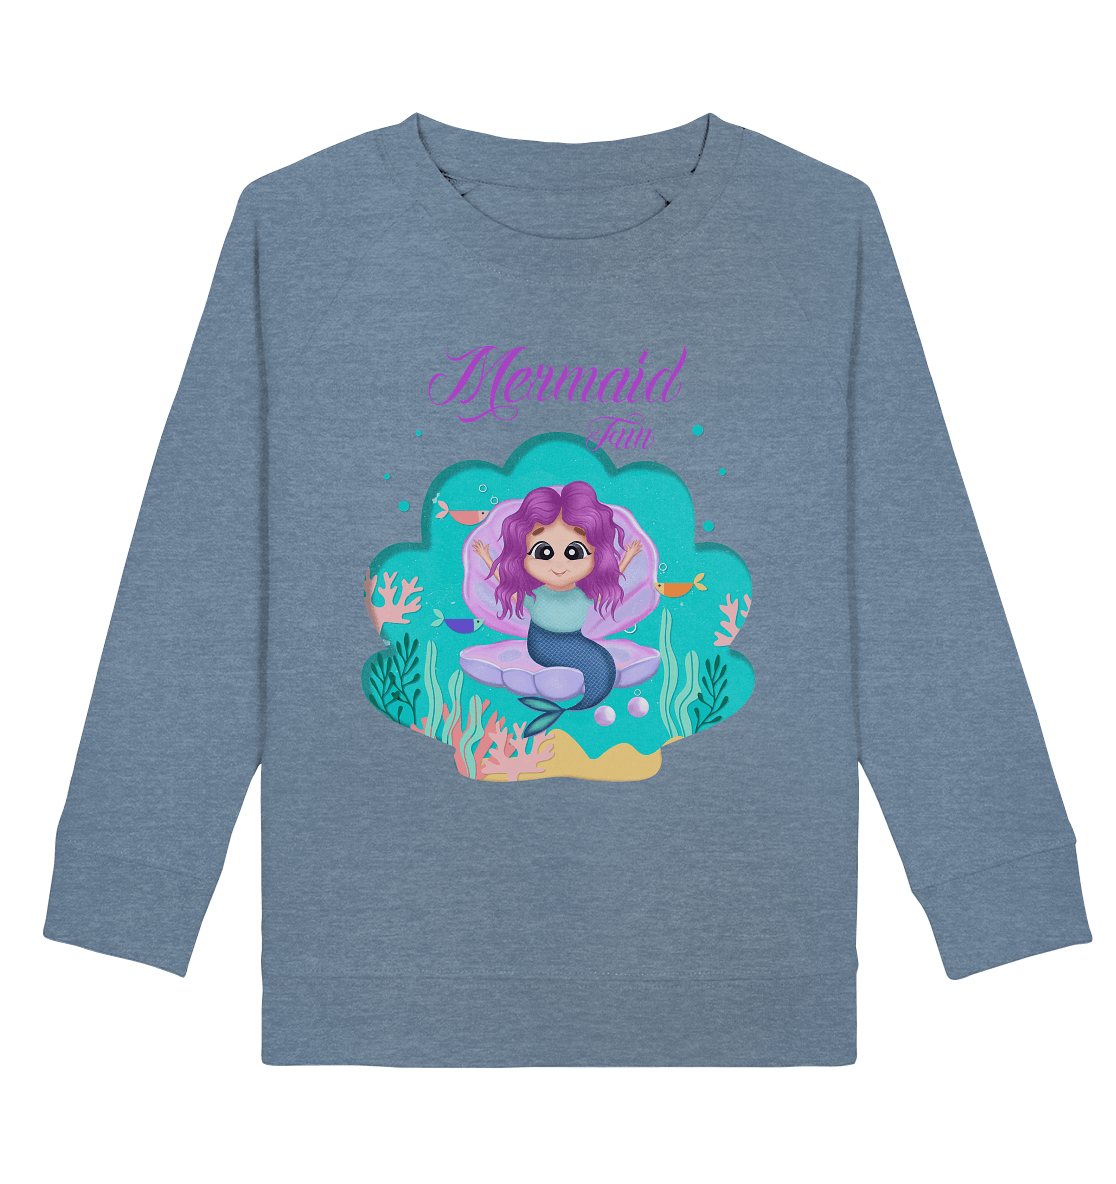 Meerjungfrau Sweatshirt Mermaid Fun Merjungfrau cartoon sweatshit für mädchen von bloominic